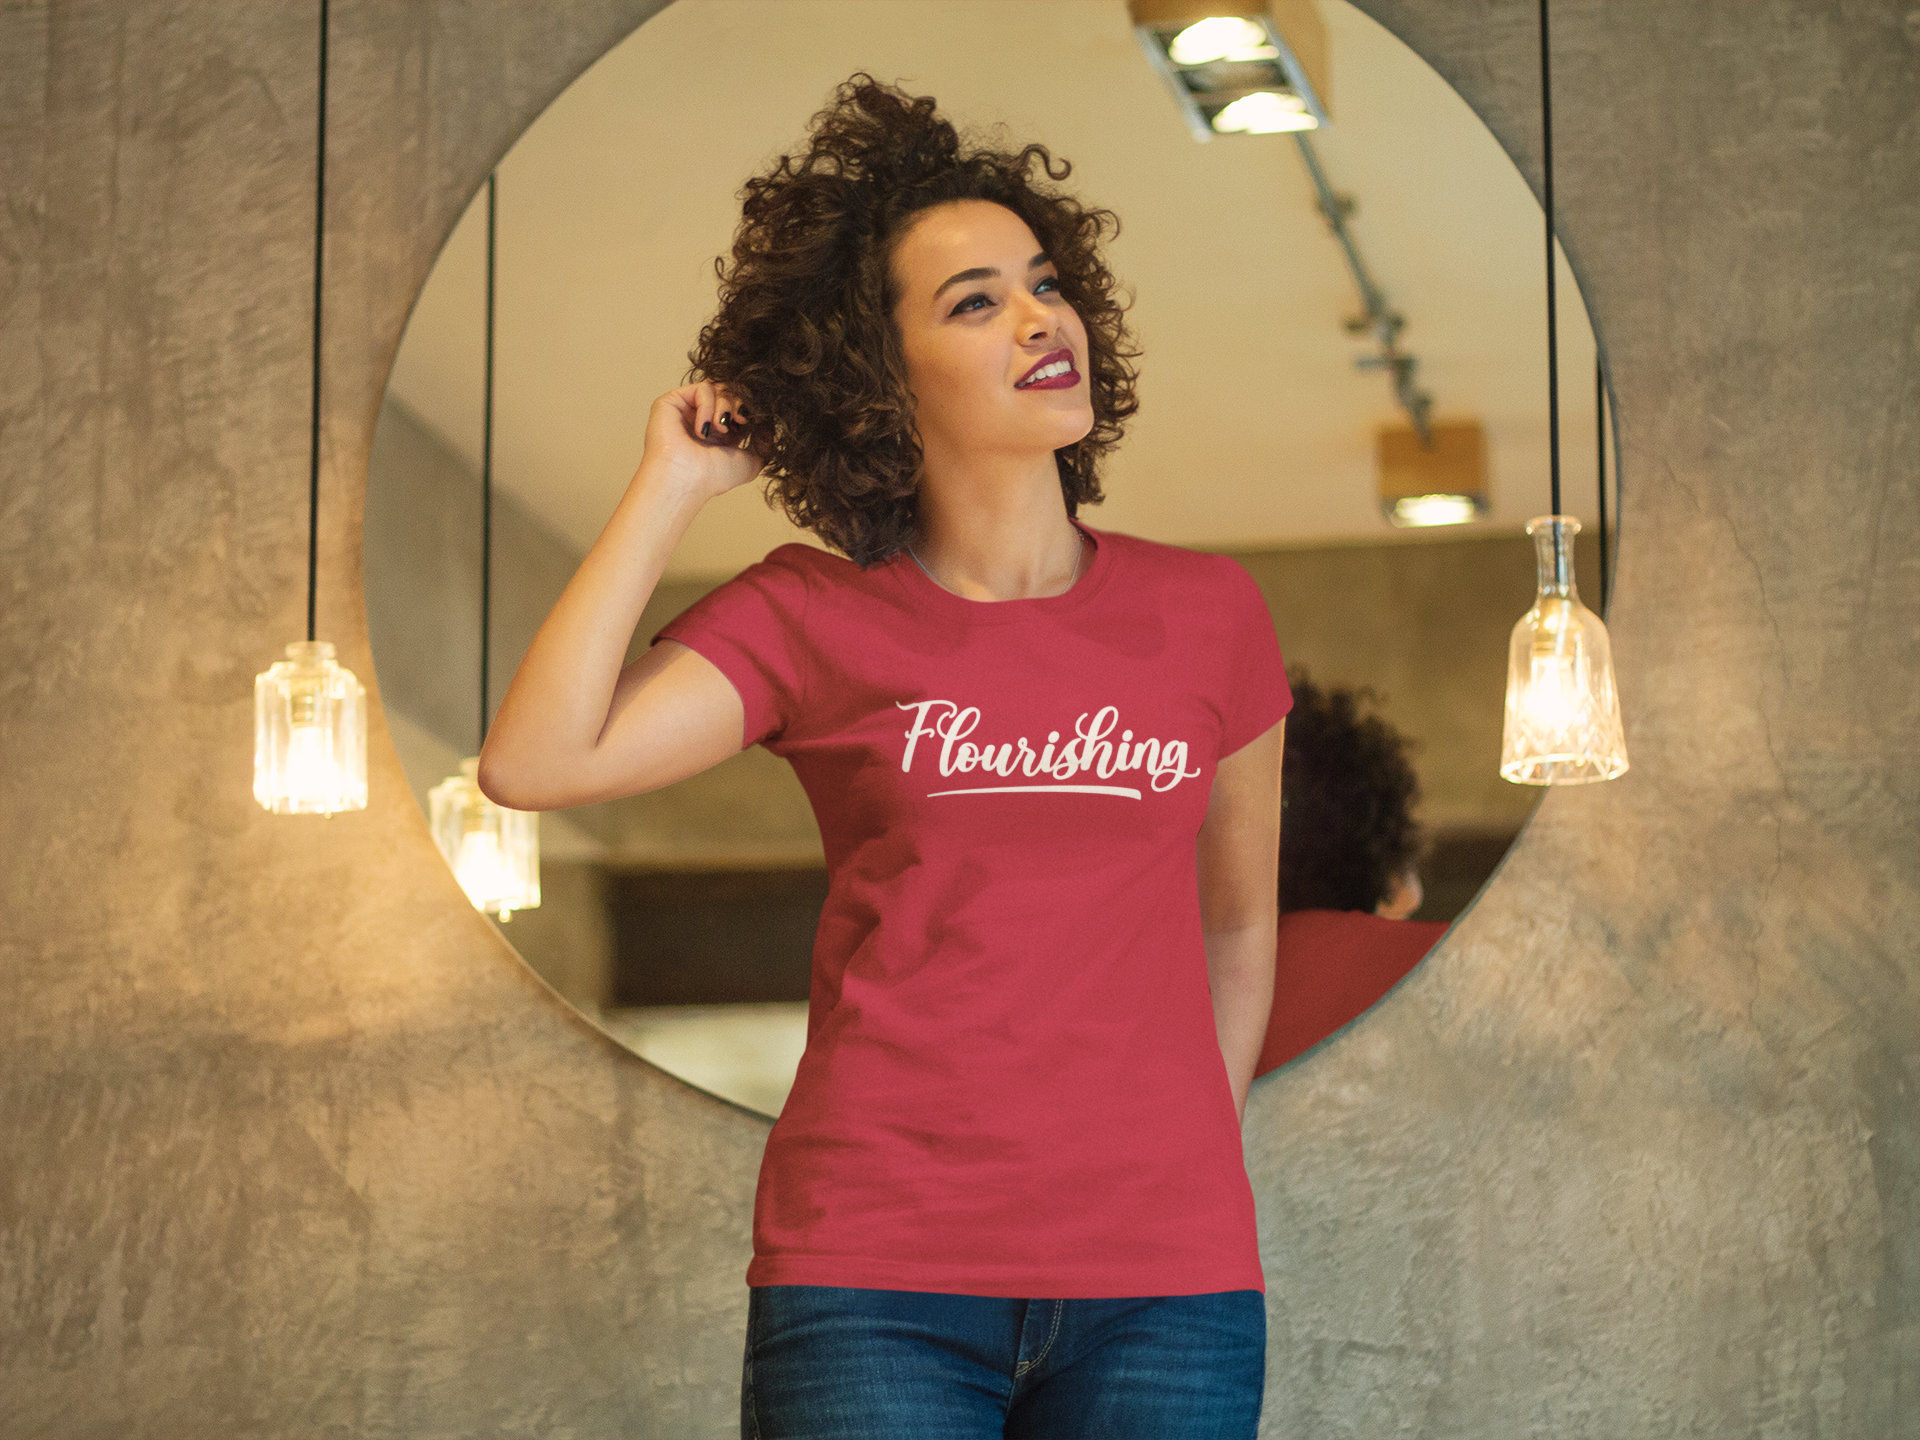 Flourishing T-Shirt - Women Empowerment T-Shirts & Apparel | CP Designs Unlimited